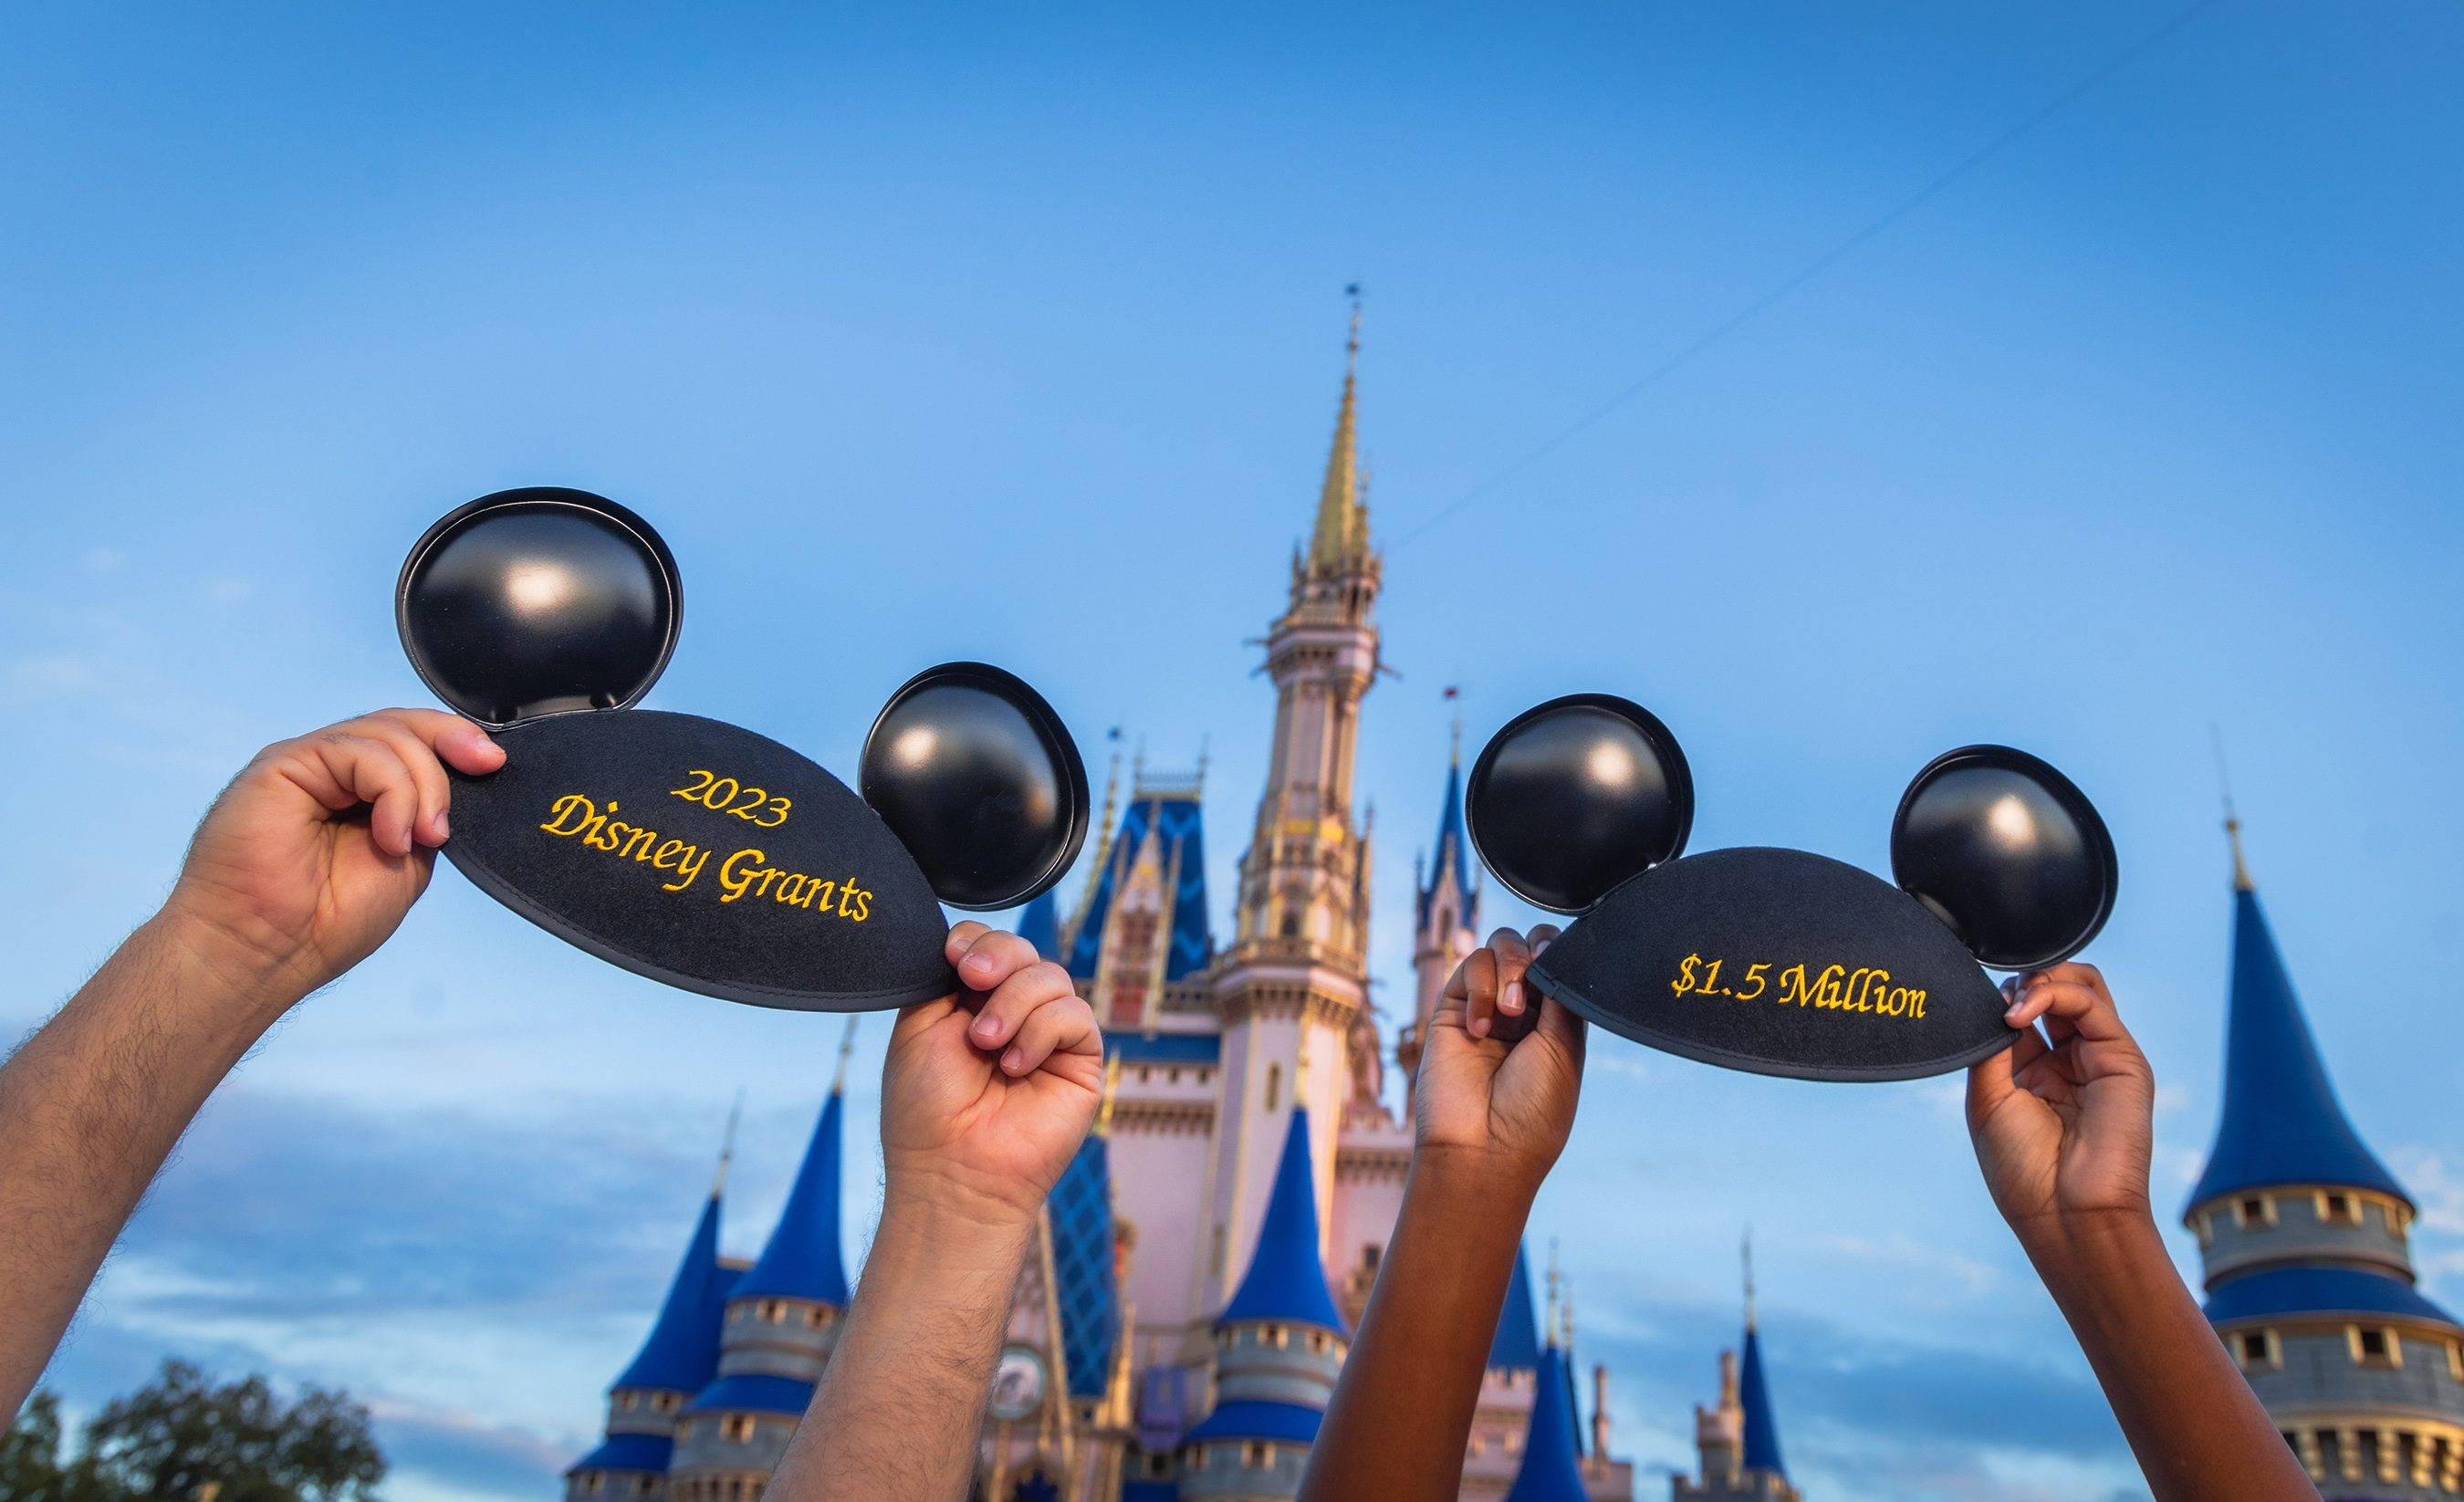 Walt Disney World pledges $1.5 million to over 15 Florida charities